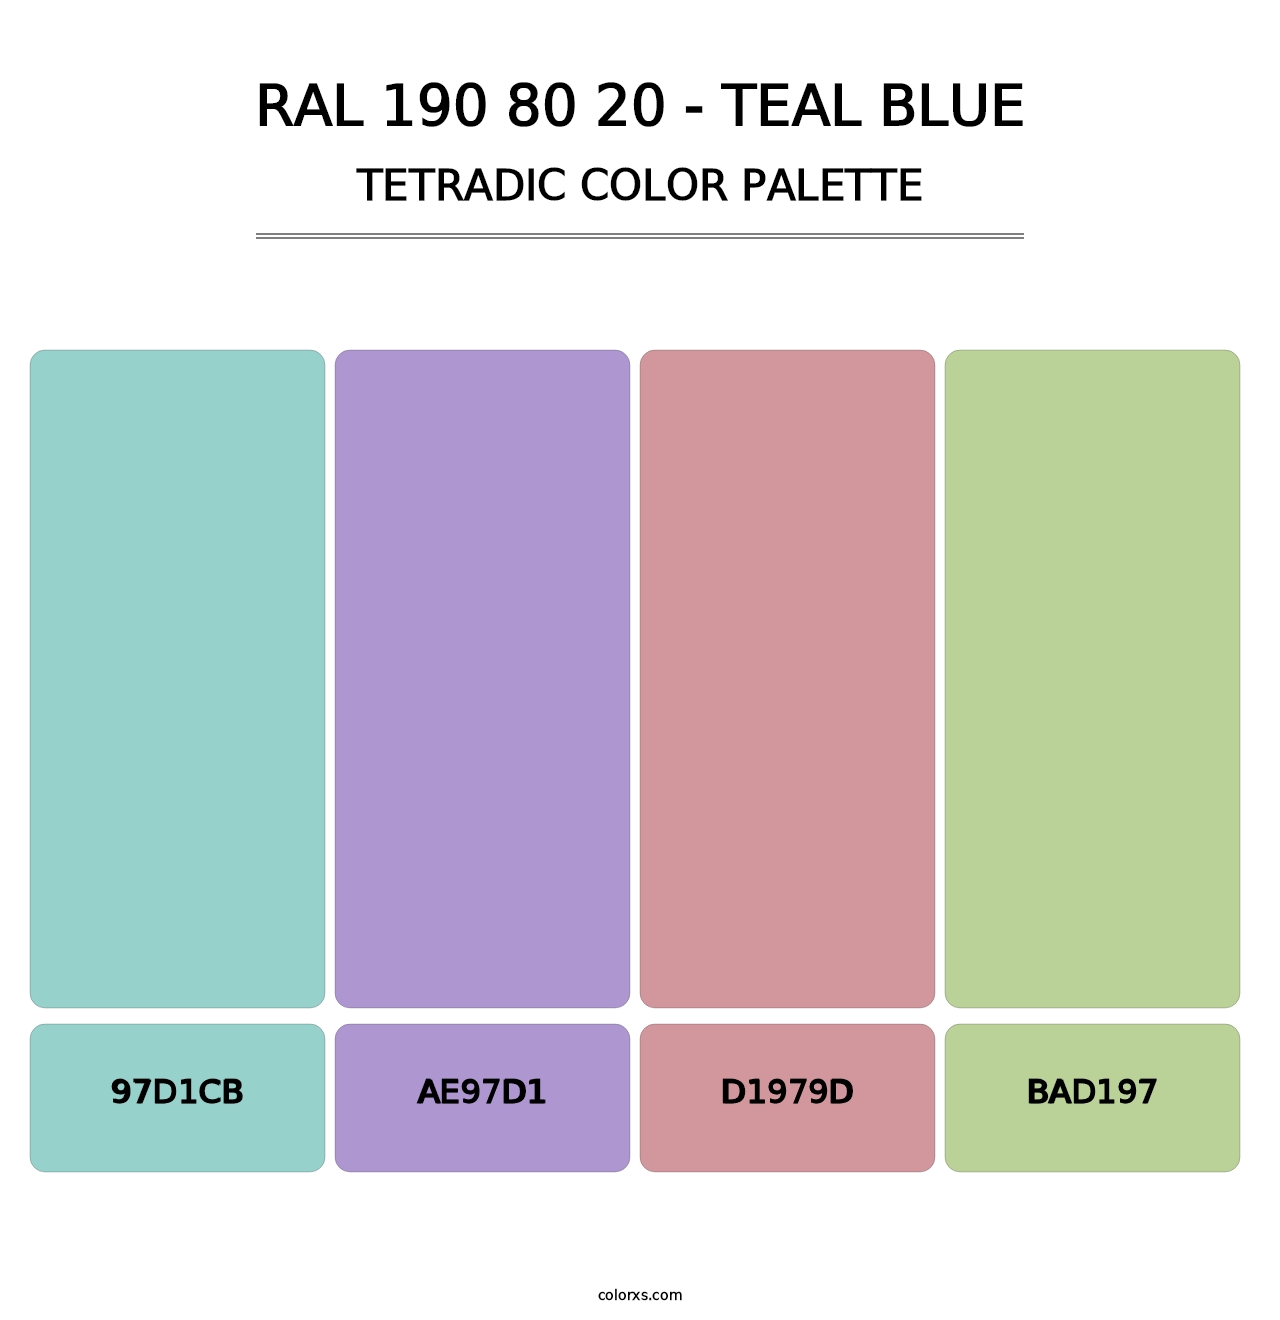 RAL 190 80 20 - Teal Blue - Tetradic Color Palette